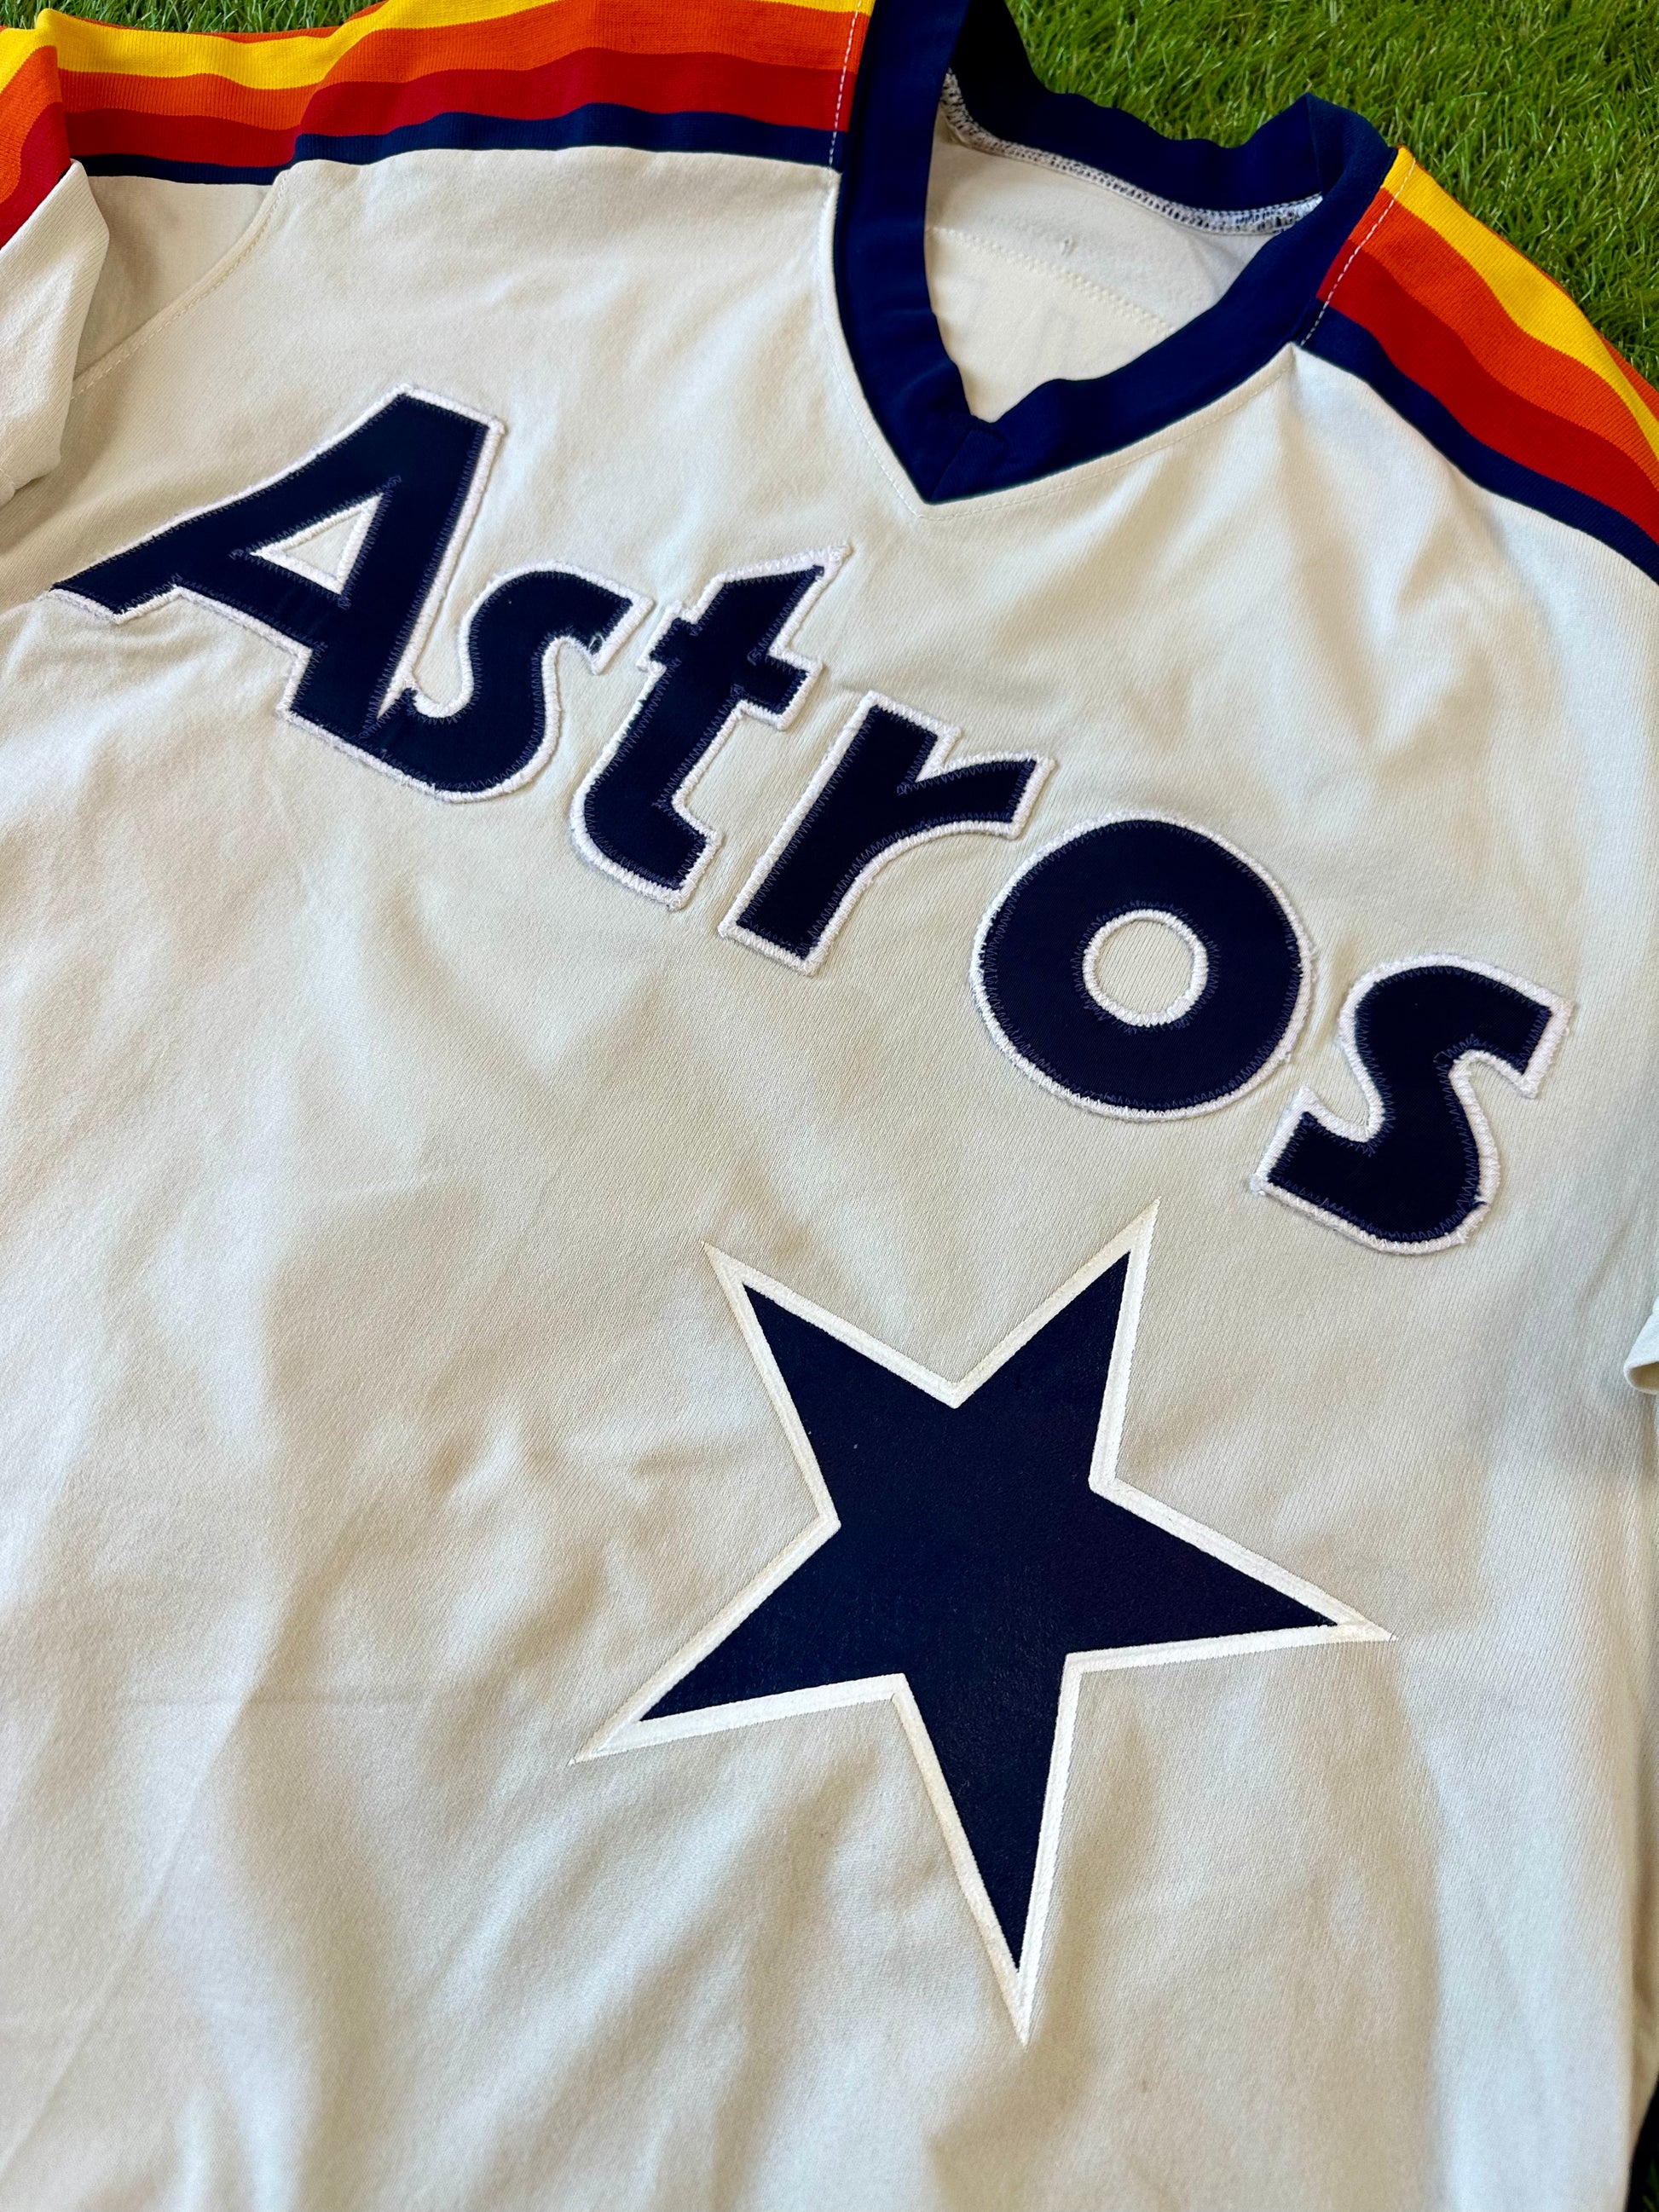 astros basketball jersey